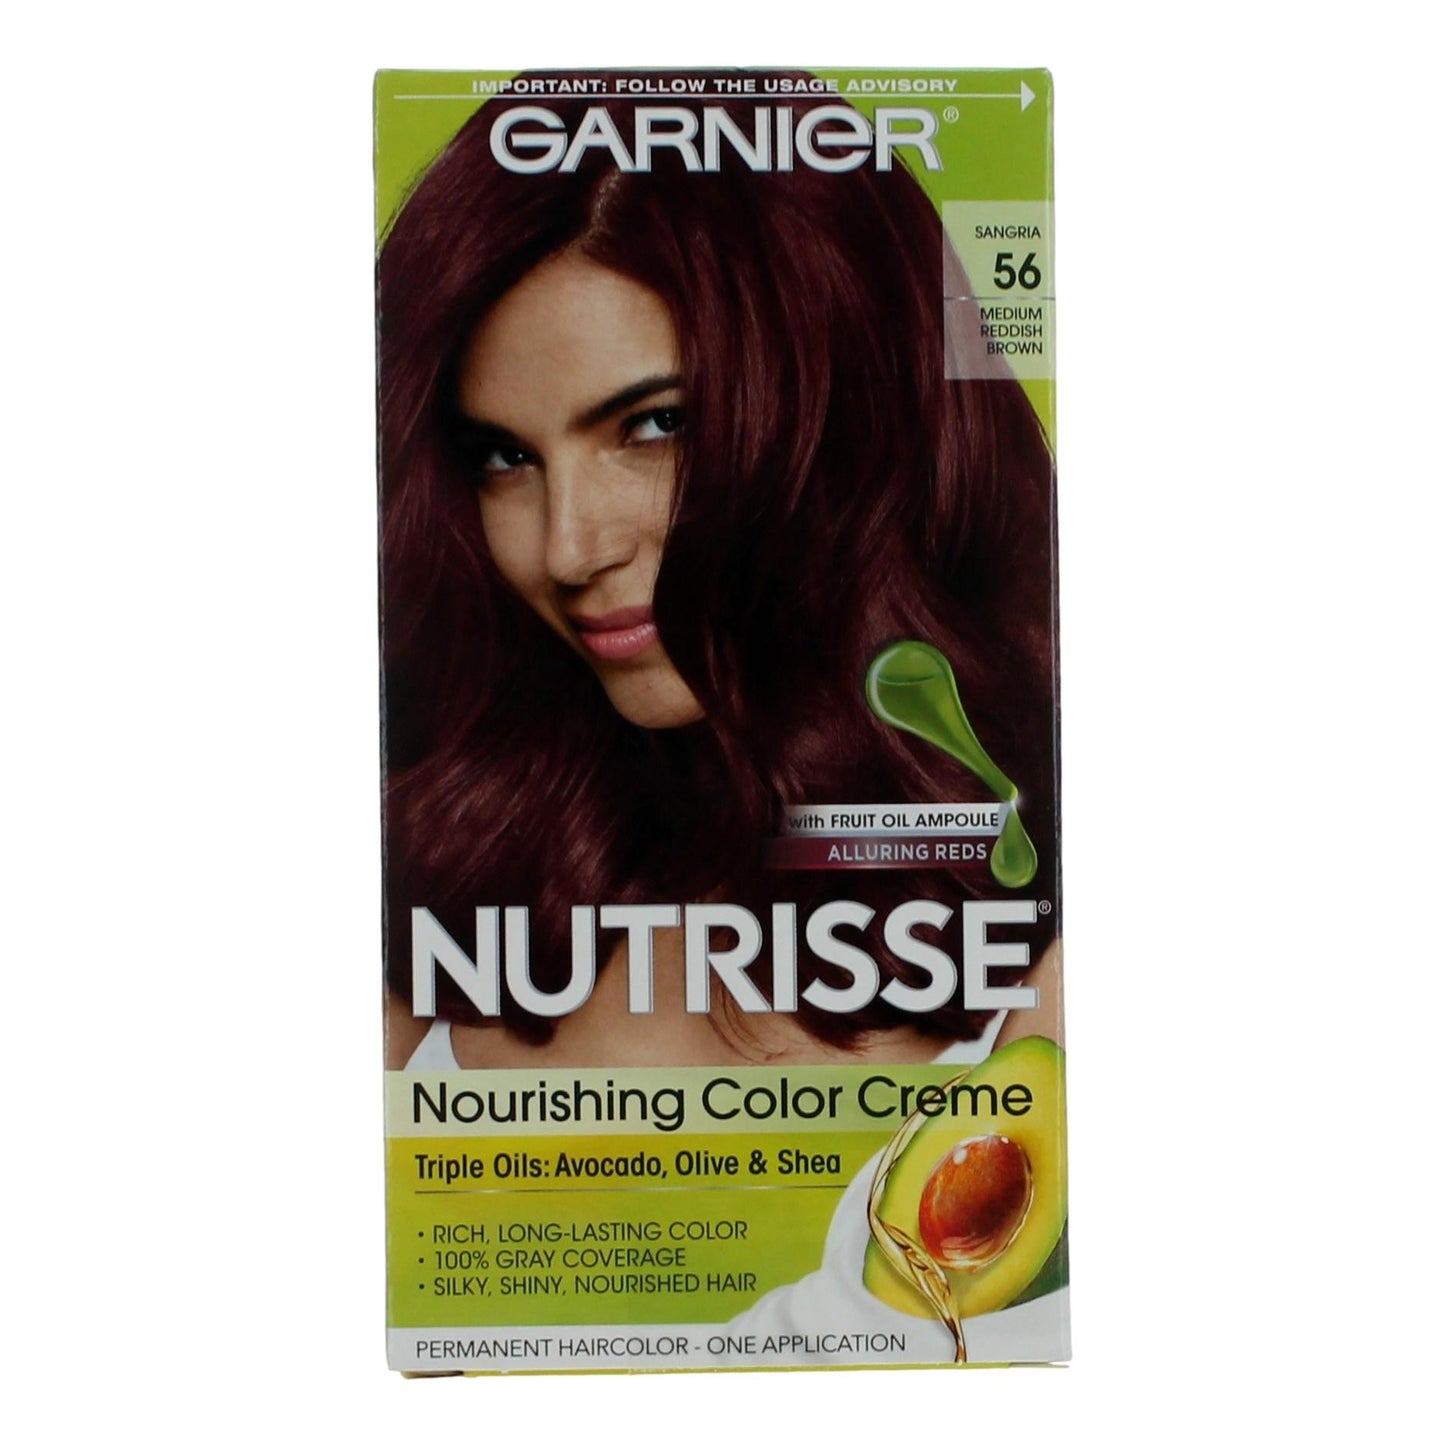 Garnier Hair Color Nutrisse Coloring Creme by Garnier, Hair Color - Sangria 56 - Sangria 56